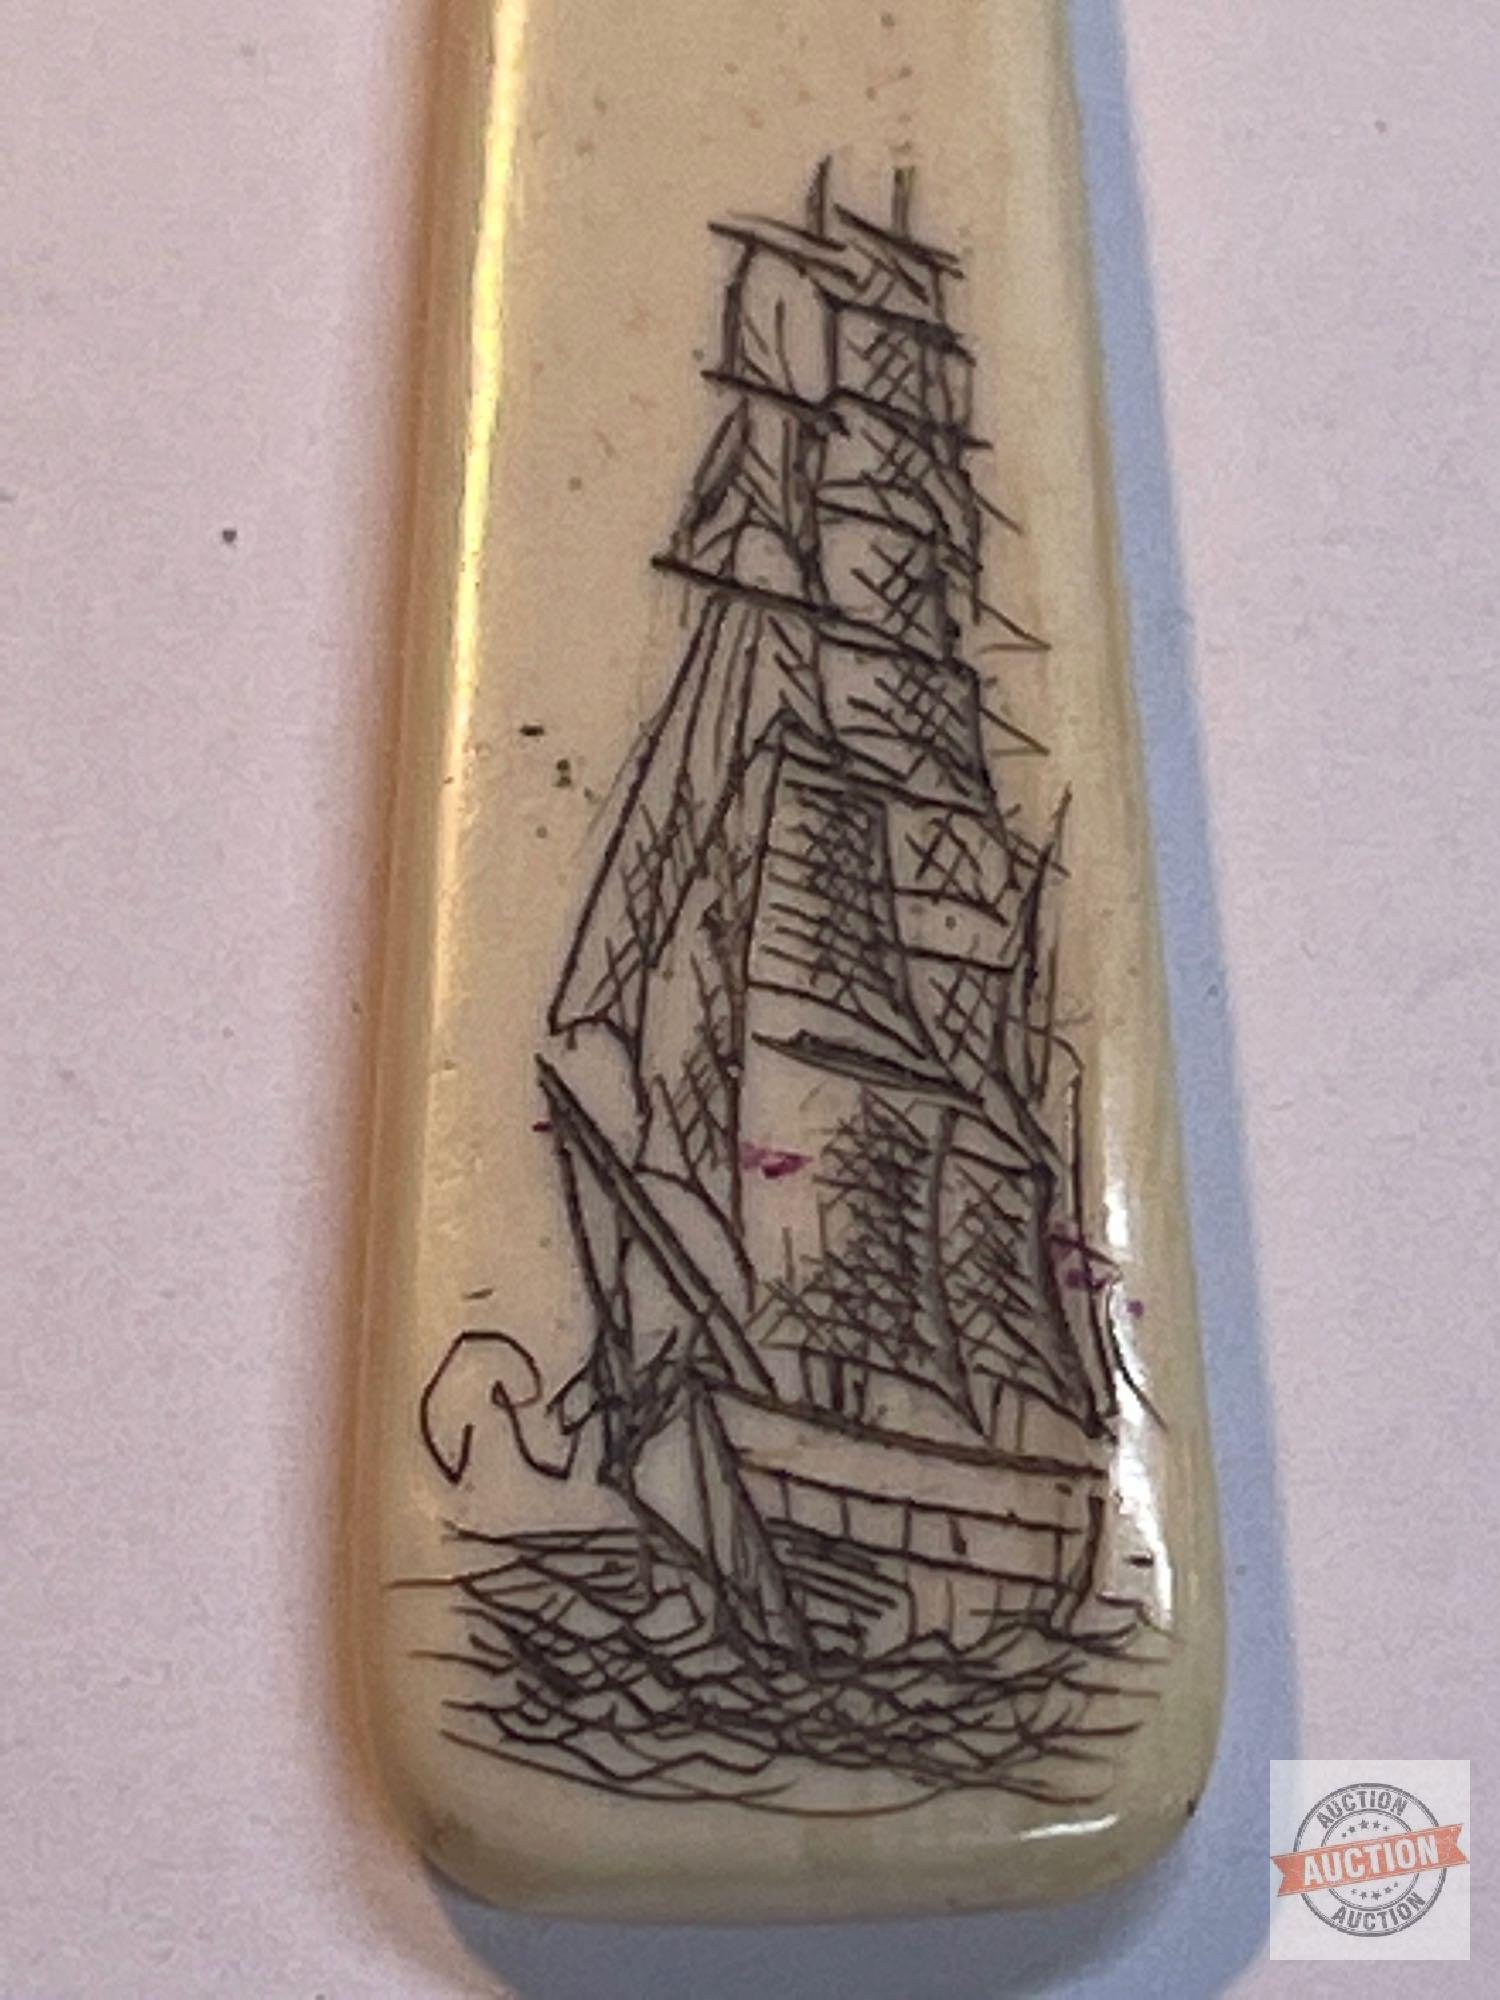 Scrimshaw - 2 - Resin oval pendant "Peterbuilt" by Barlow w/ fly fishing scene 1.75" and bone carv